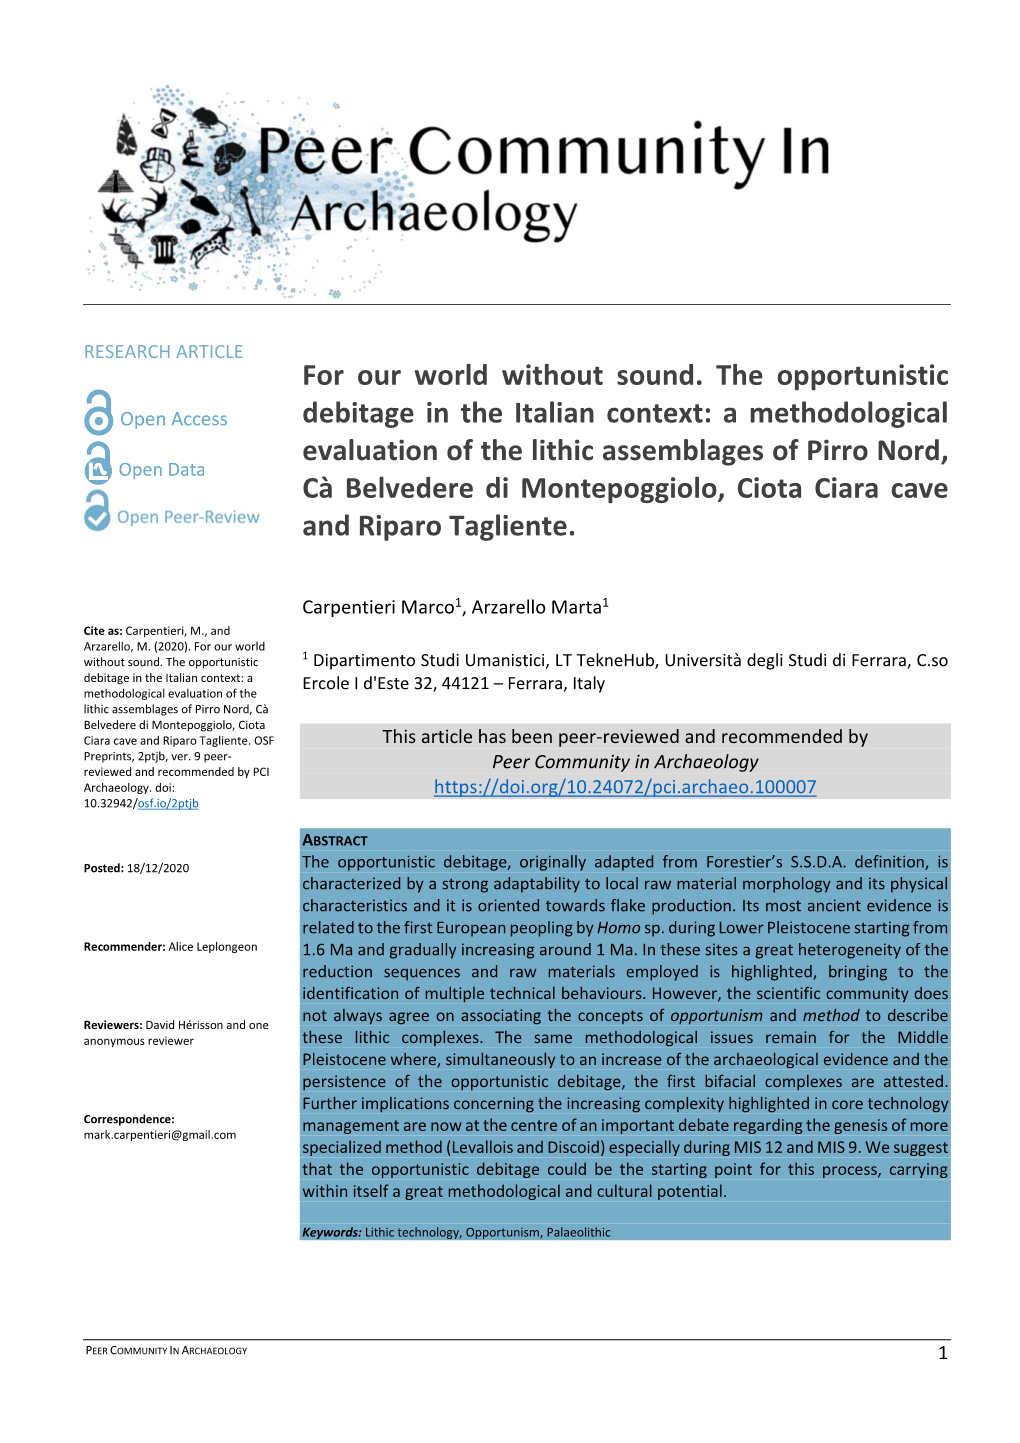 A Methodological Evaluation of the Lithic Assemblages of Pirro Nord, Cà Belvedere Di Montepoggiolo, Ciota Ciara Cave and Riparo Tagliente